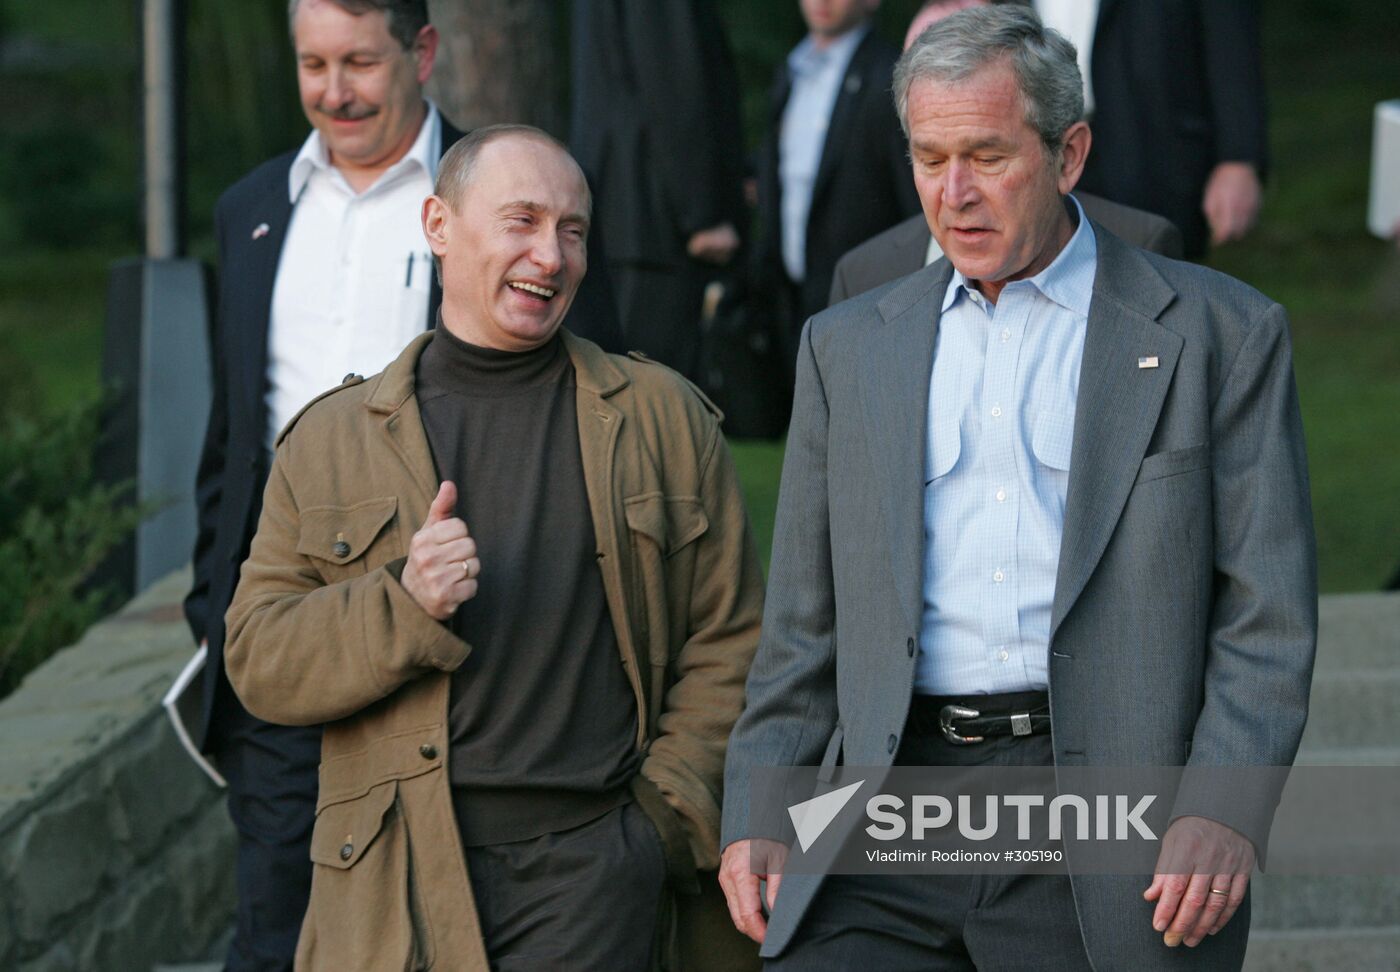 George W. Bush and Vladimir Putin